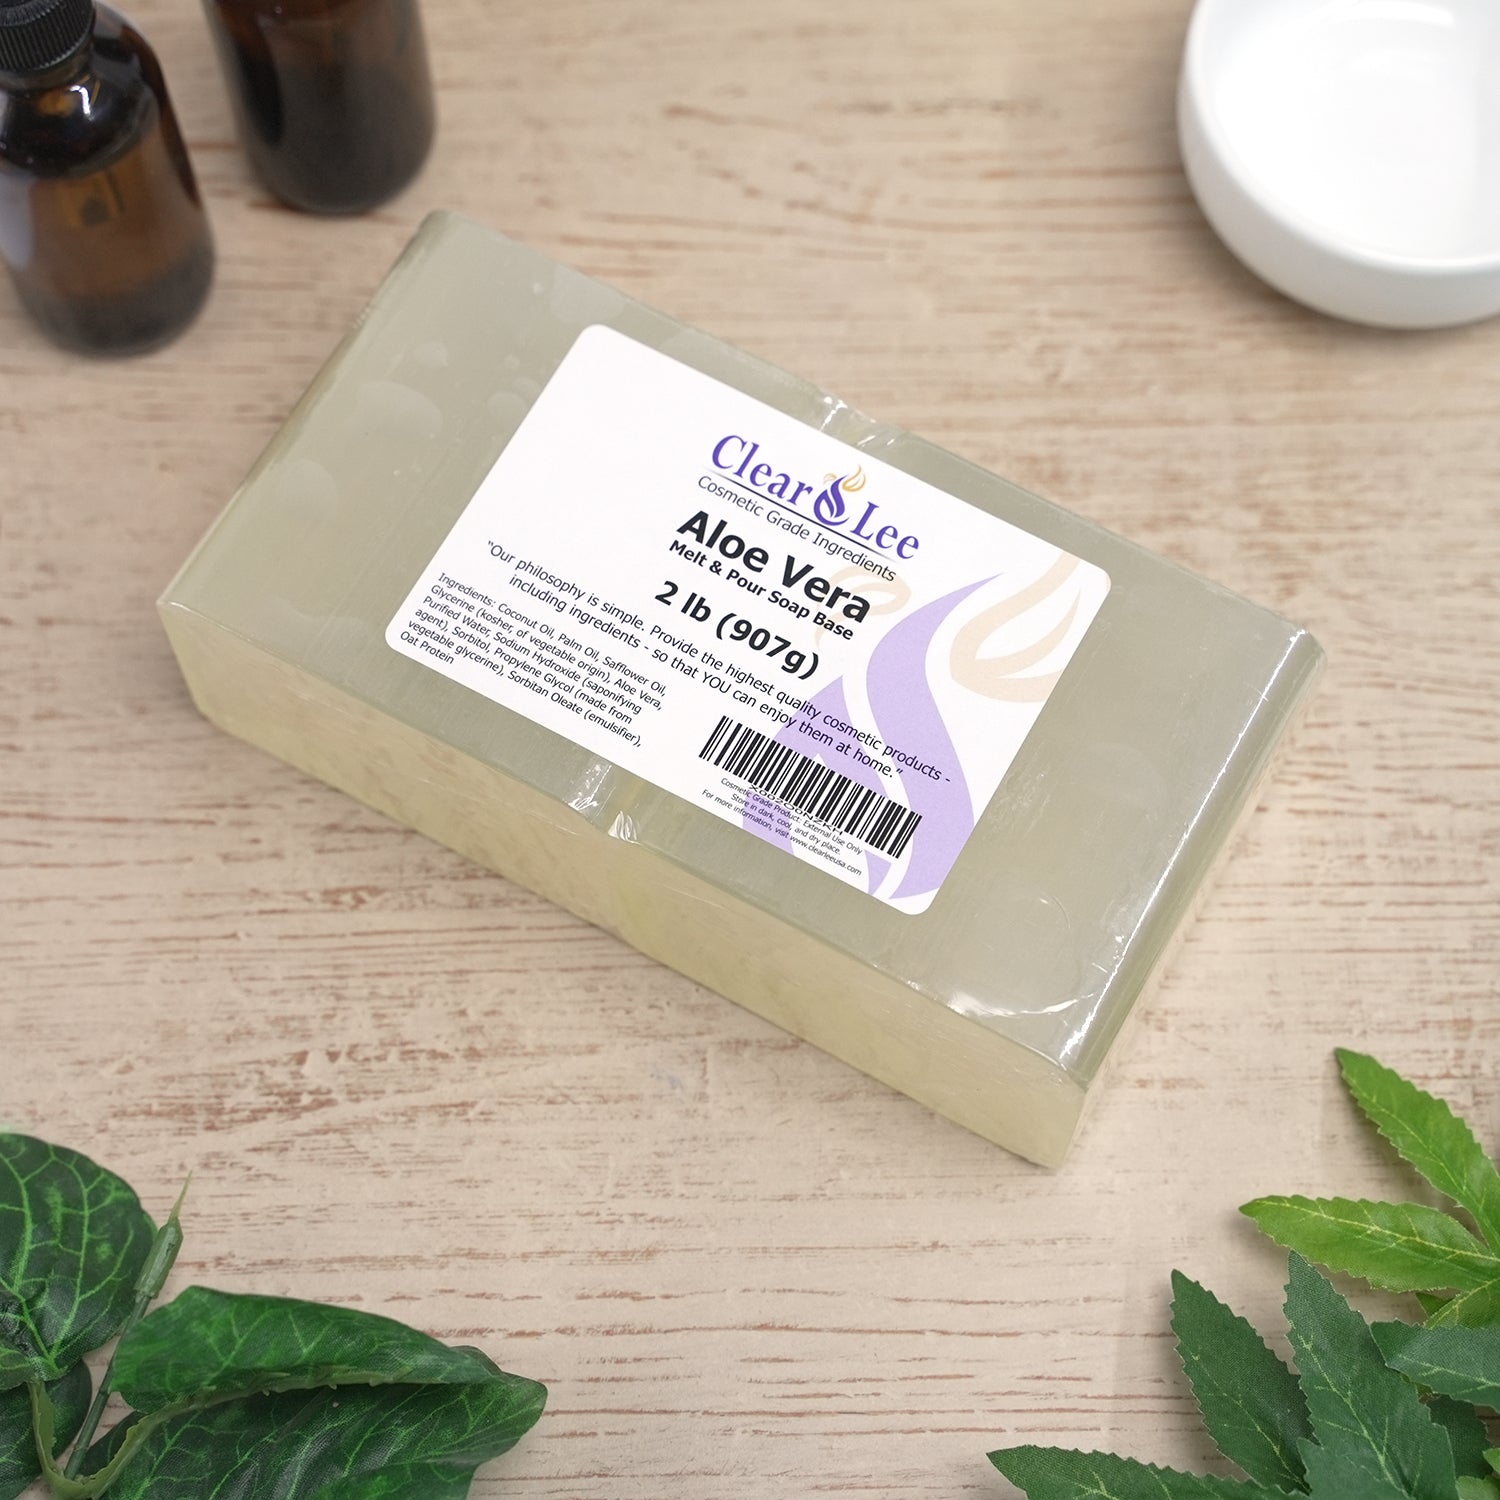 Saponify - 2Lb Aloe Melt and Pour Soap Base, Skin-Enhancing Pure